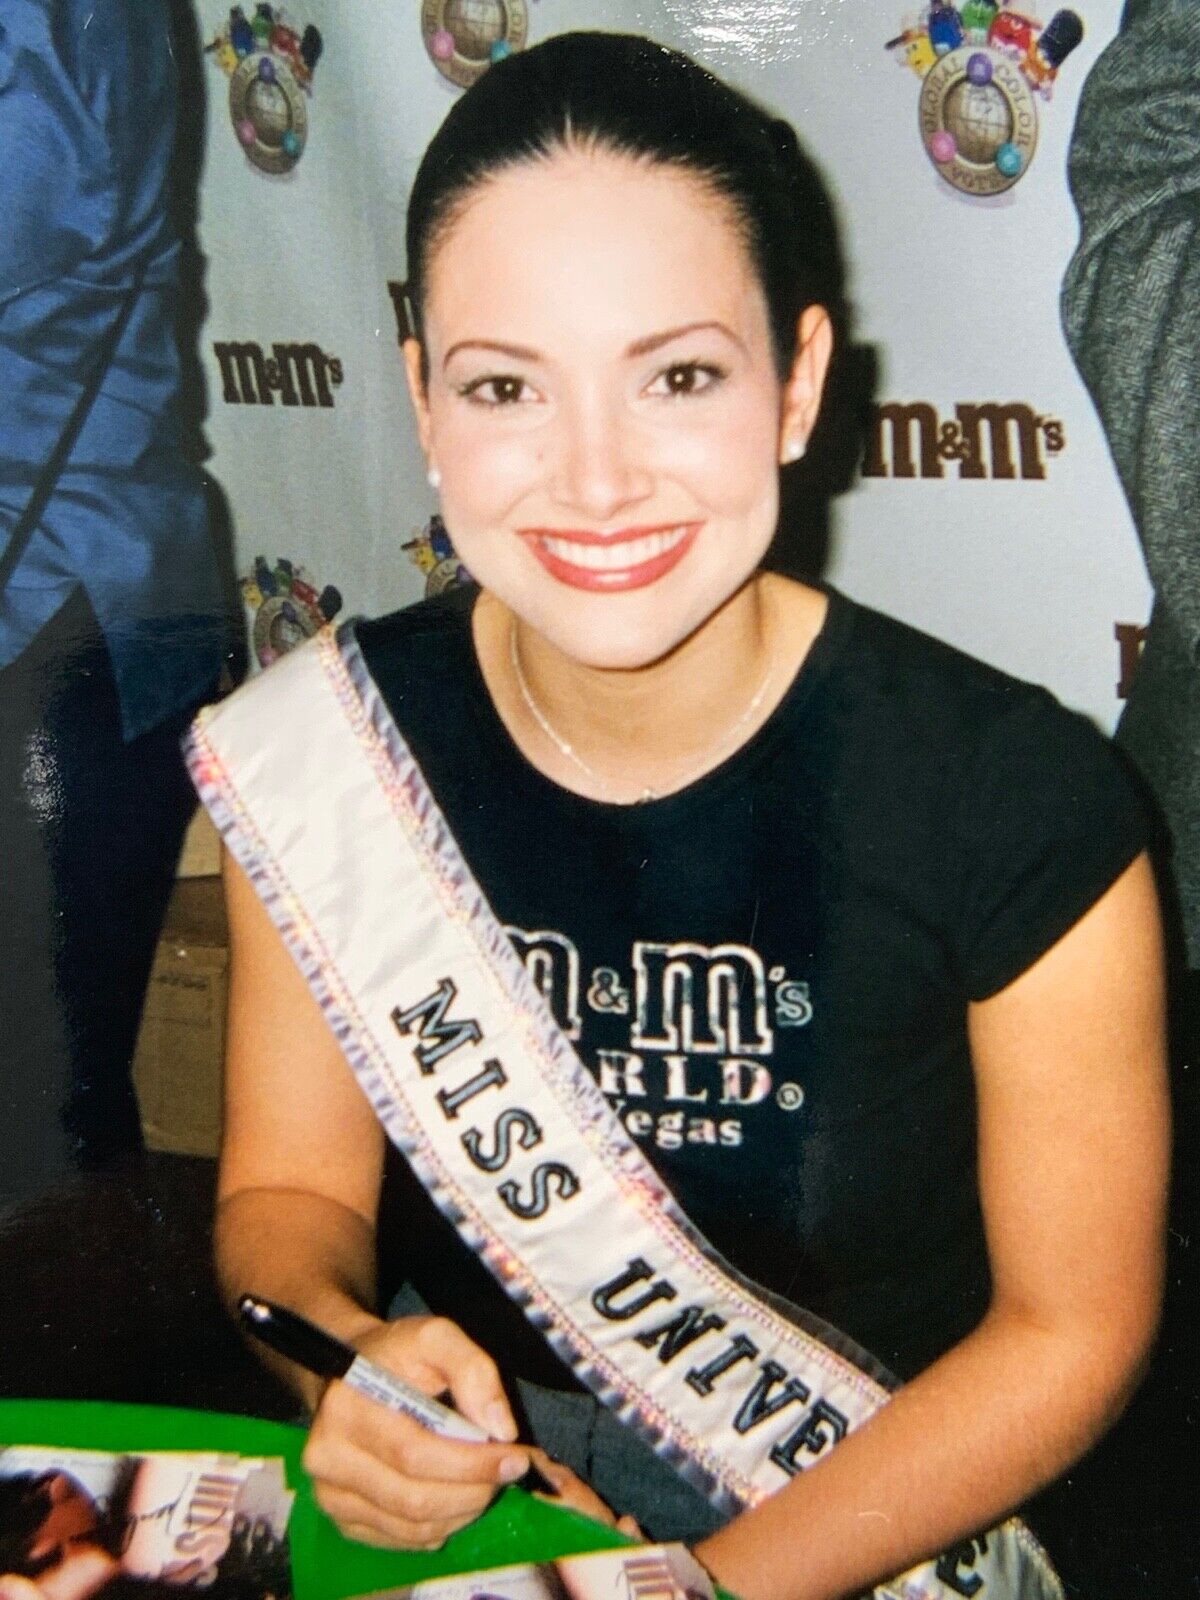 (Kd) FOUND PHOTO Photograph Snapshot 4x6 Color Beautiful Miss Universe 2002